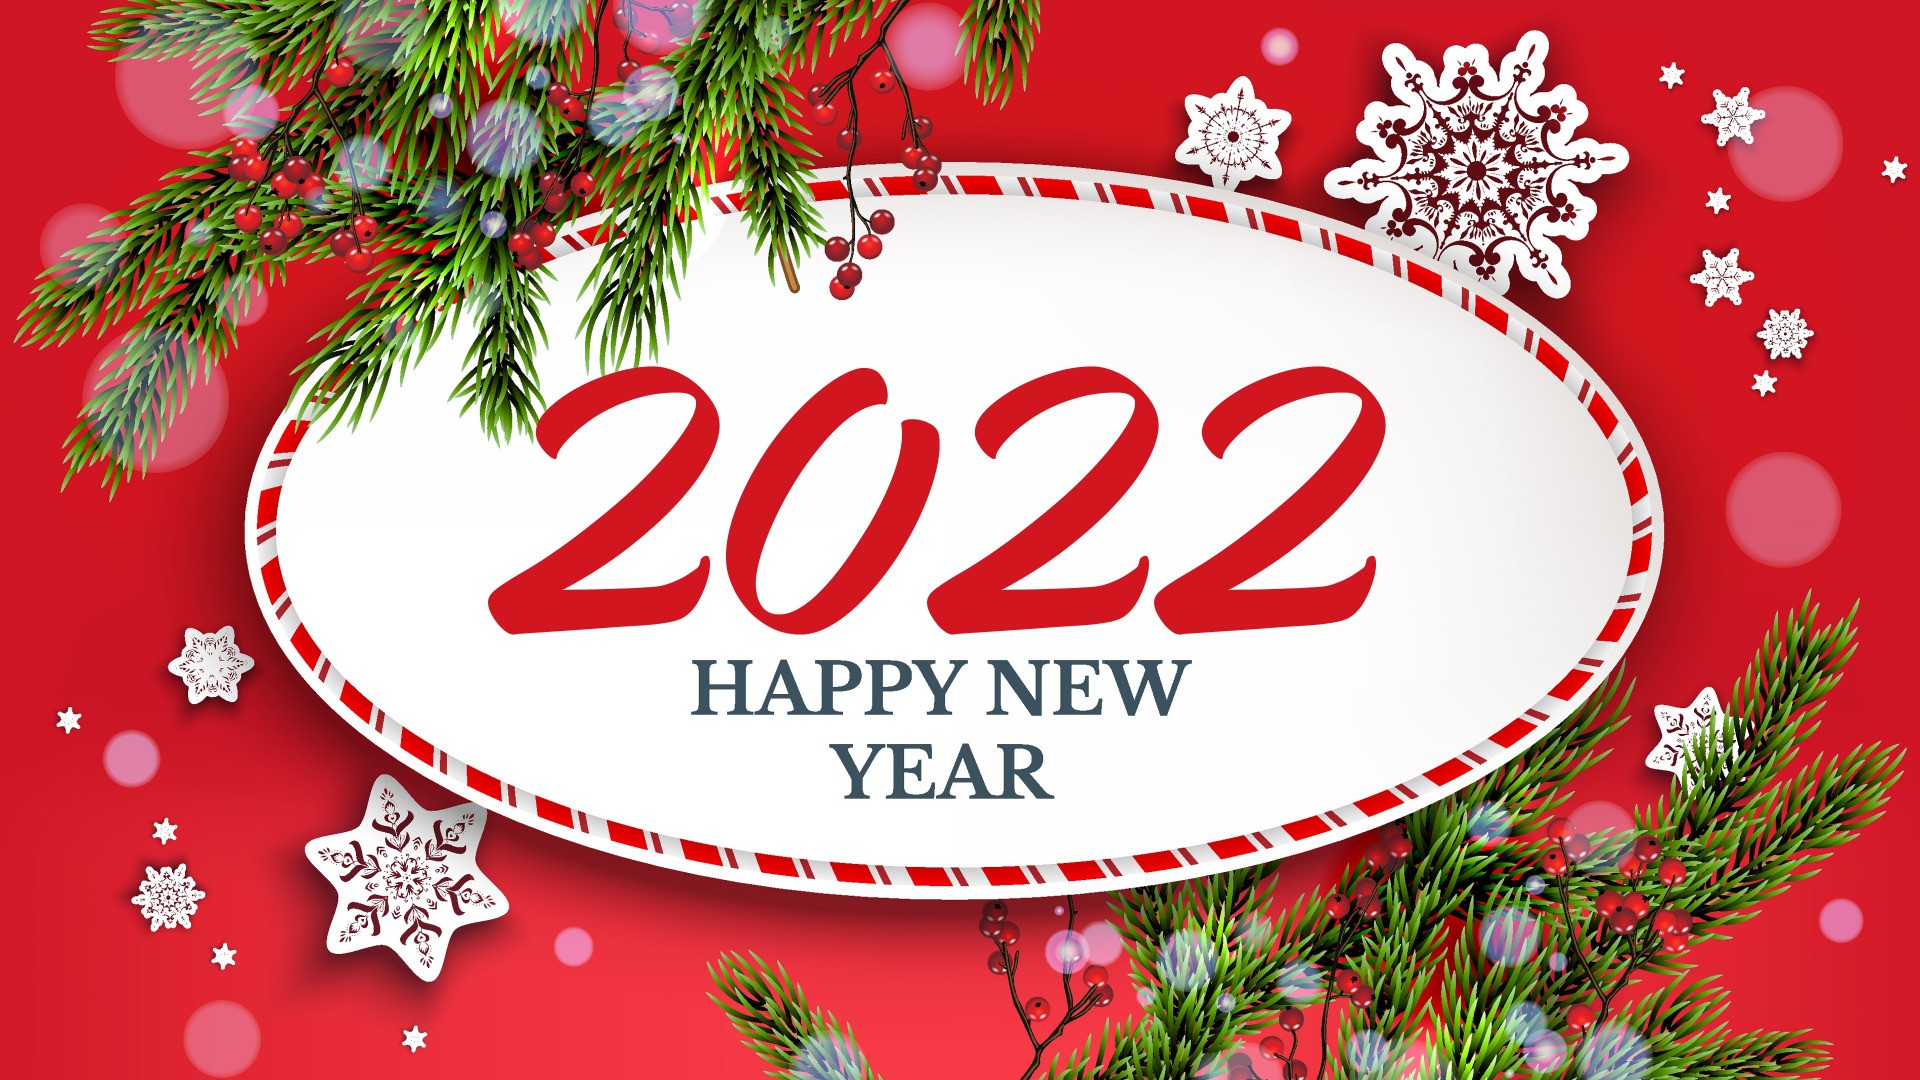 New Year 2022 desktop wallpaper free download